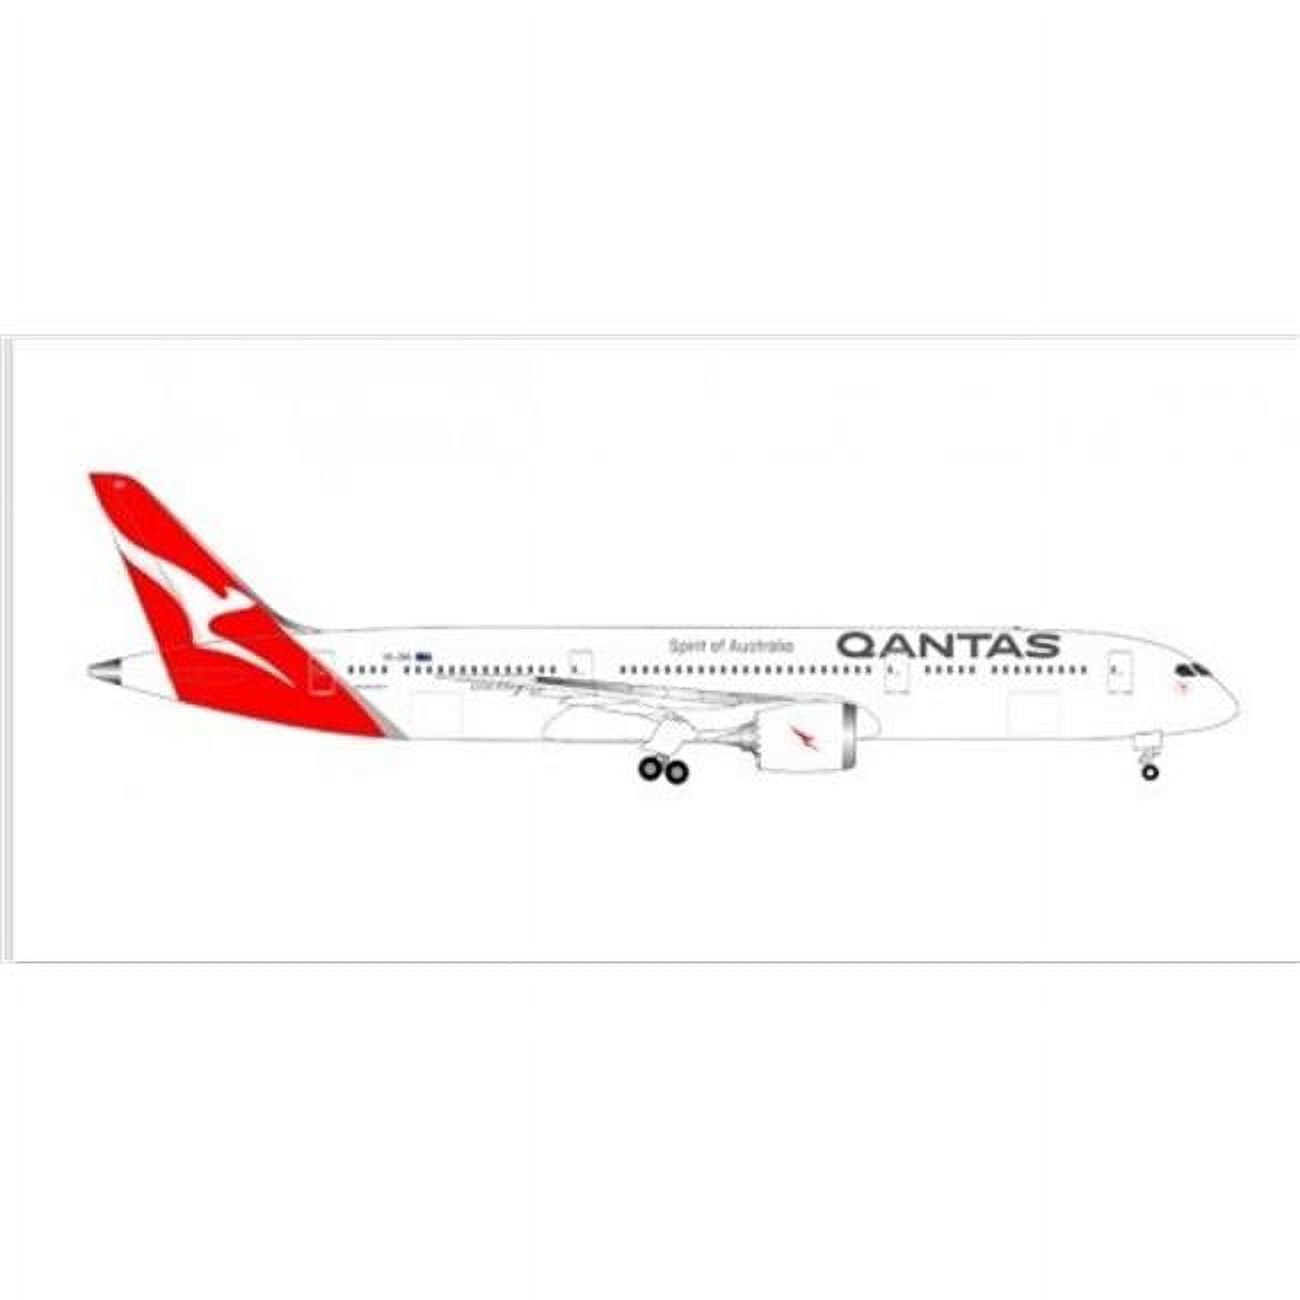 He558778 1 Isto 200 Qantas Boeing 787-9 Dreamliner New Livery Model Planes